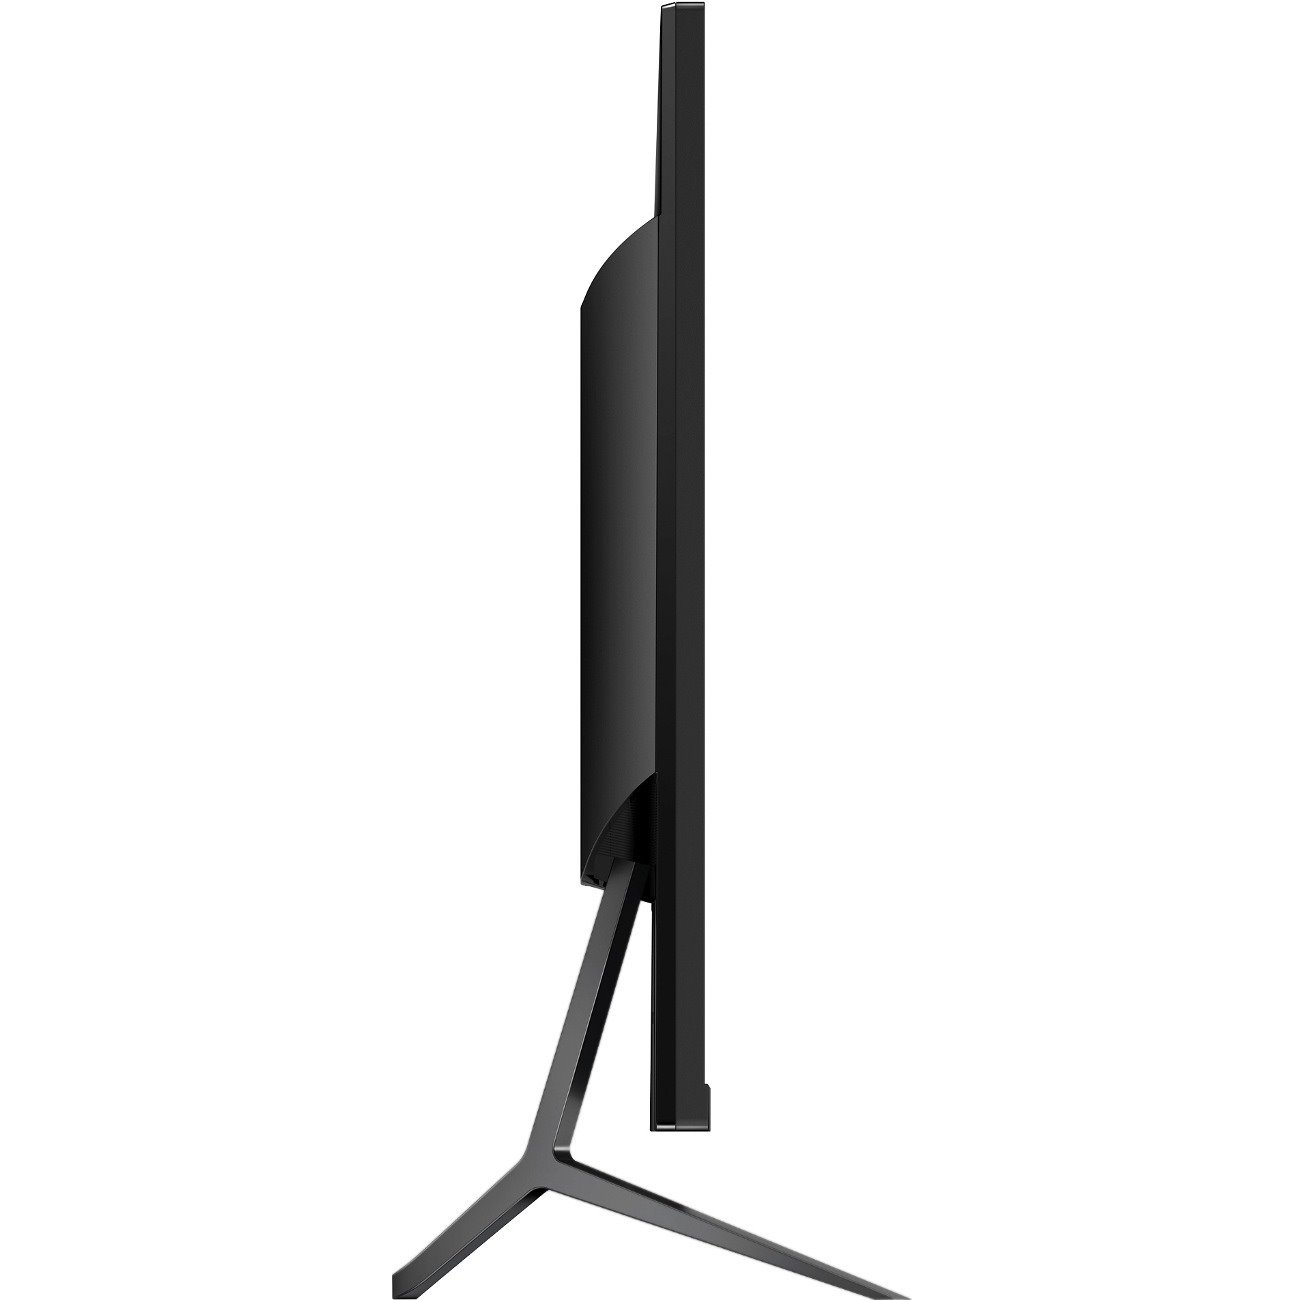 Philips Momentum 436M6VBRAB 108 cm (42.5") 4K UHD WLED Gaming LCD Monitor - 16:9 - Textured Black, Glossy Black